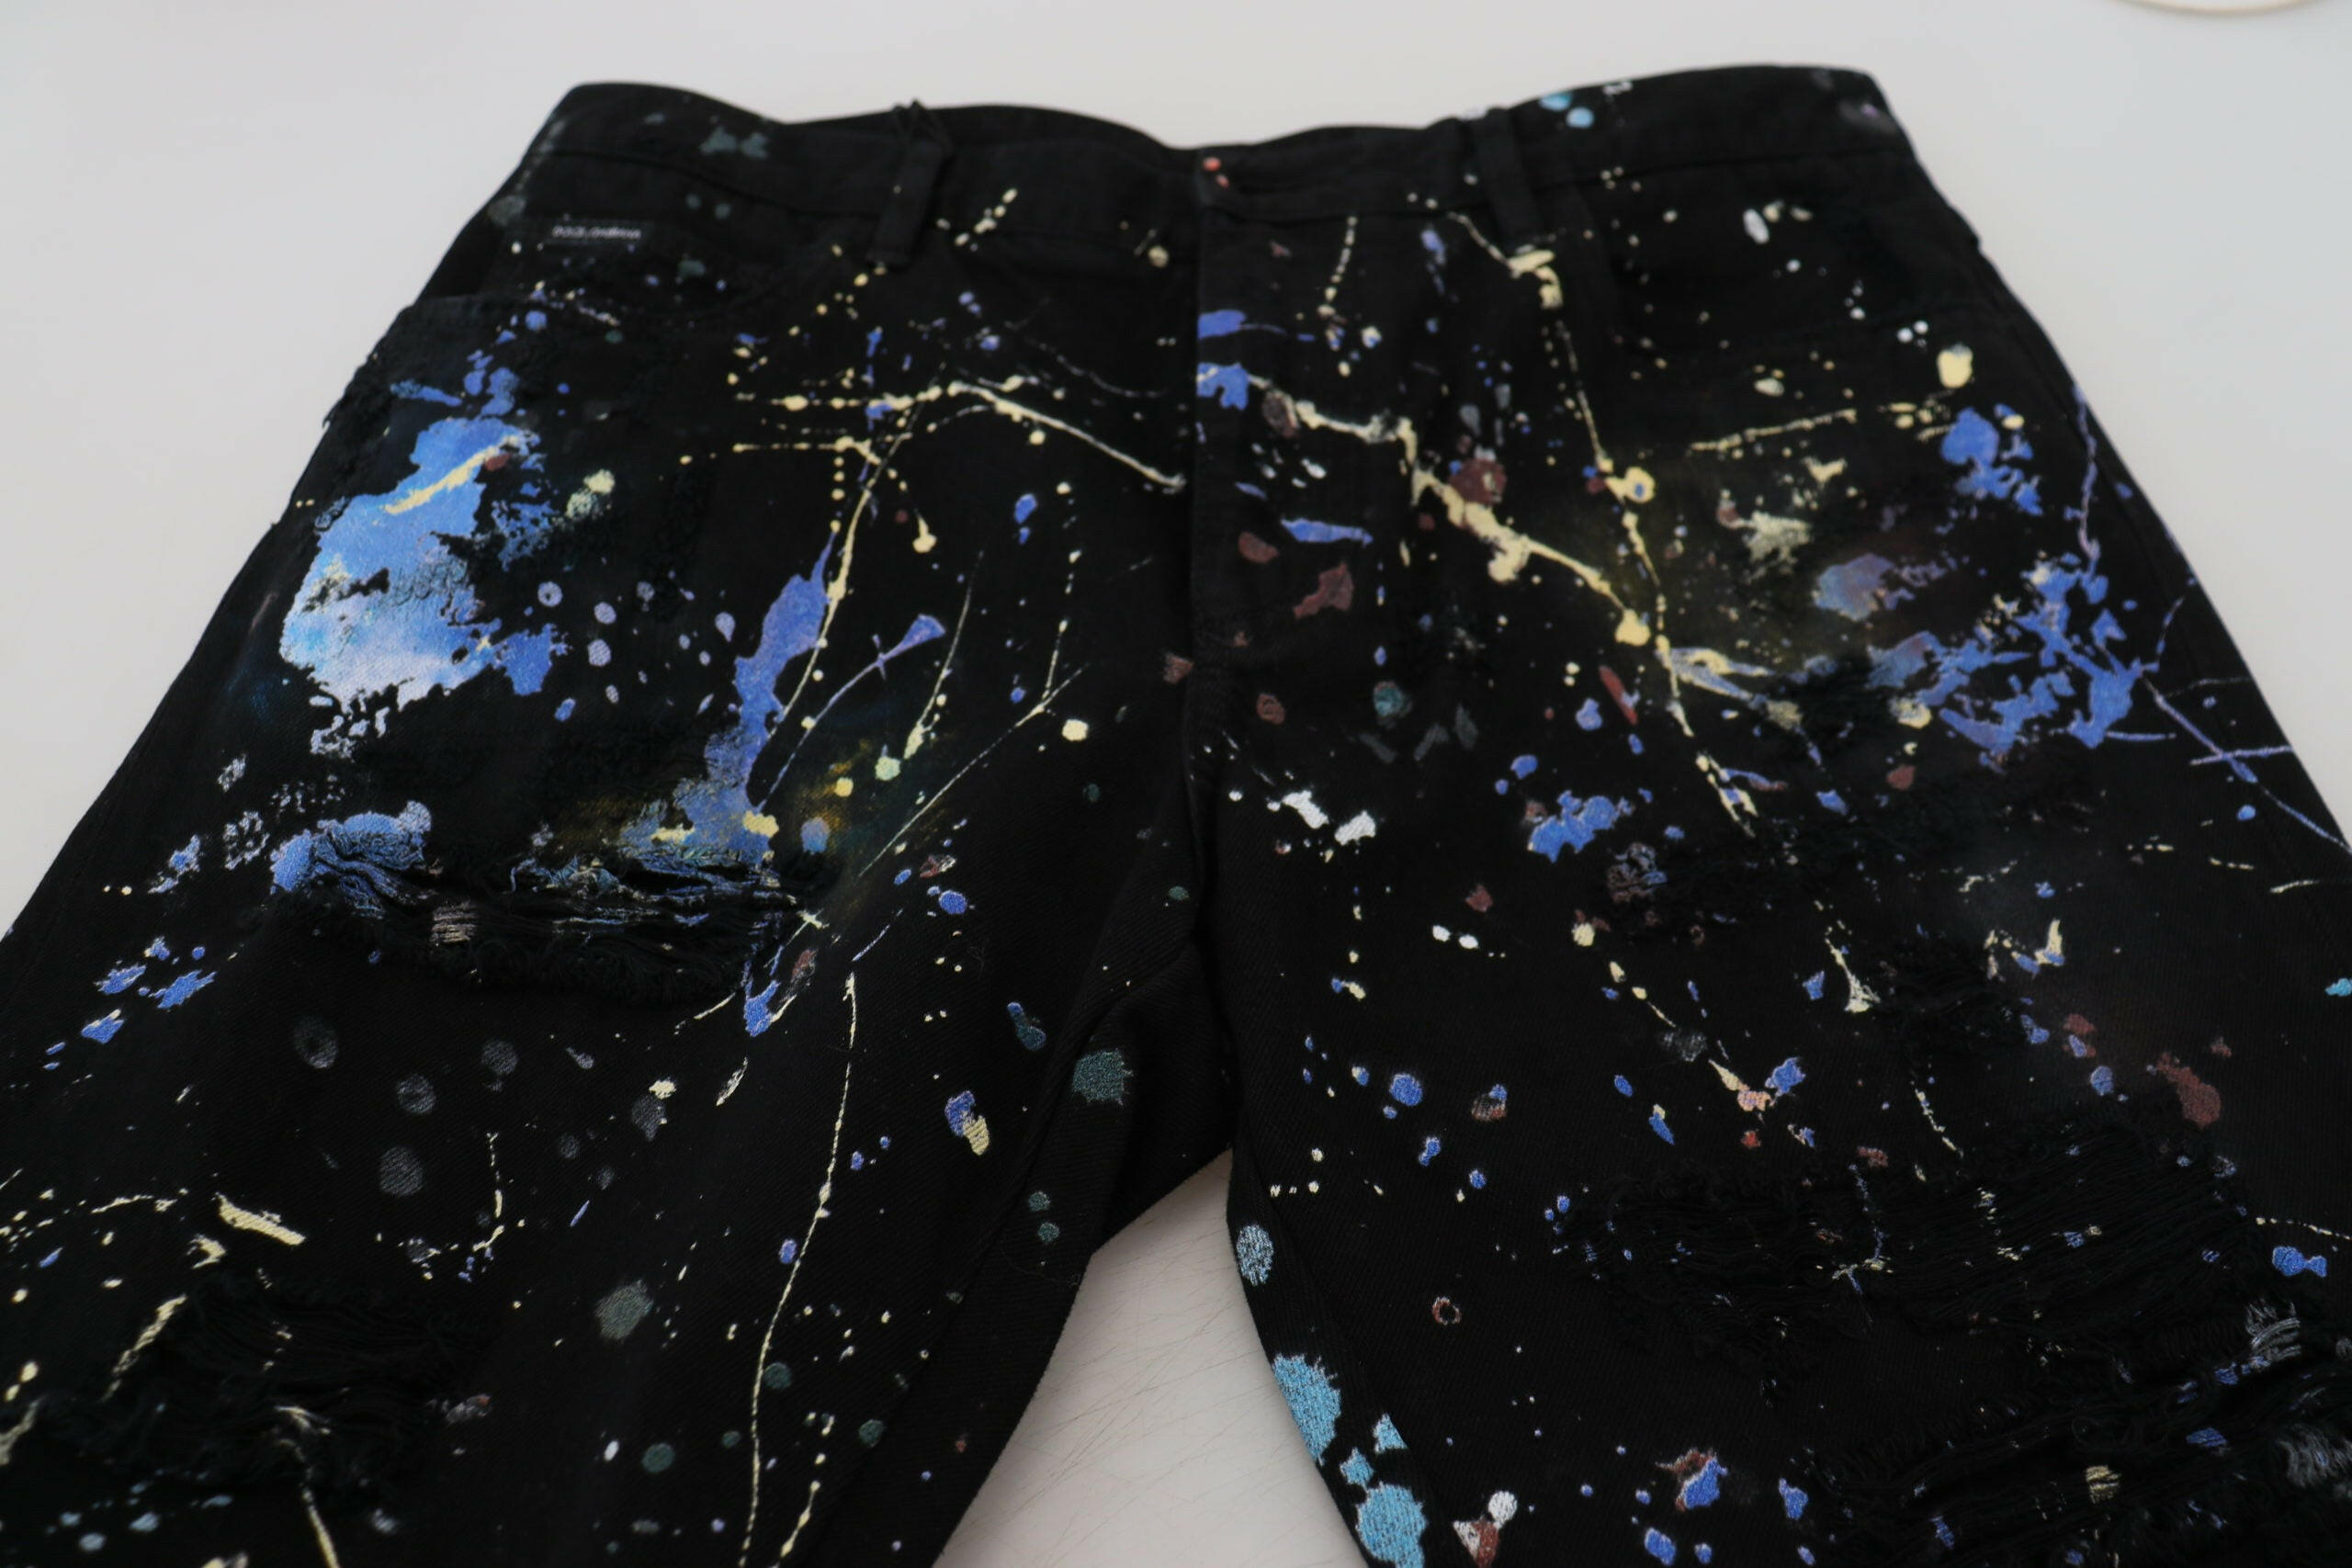 Dolce & Gabbana Black Cotton Color Splash Print Denim Jeans - GENUINE AUTHENTIC BRAND LLC  